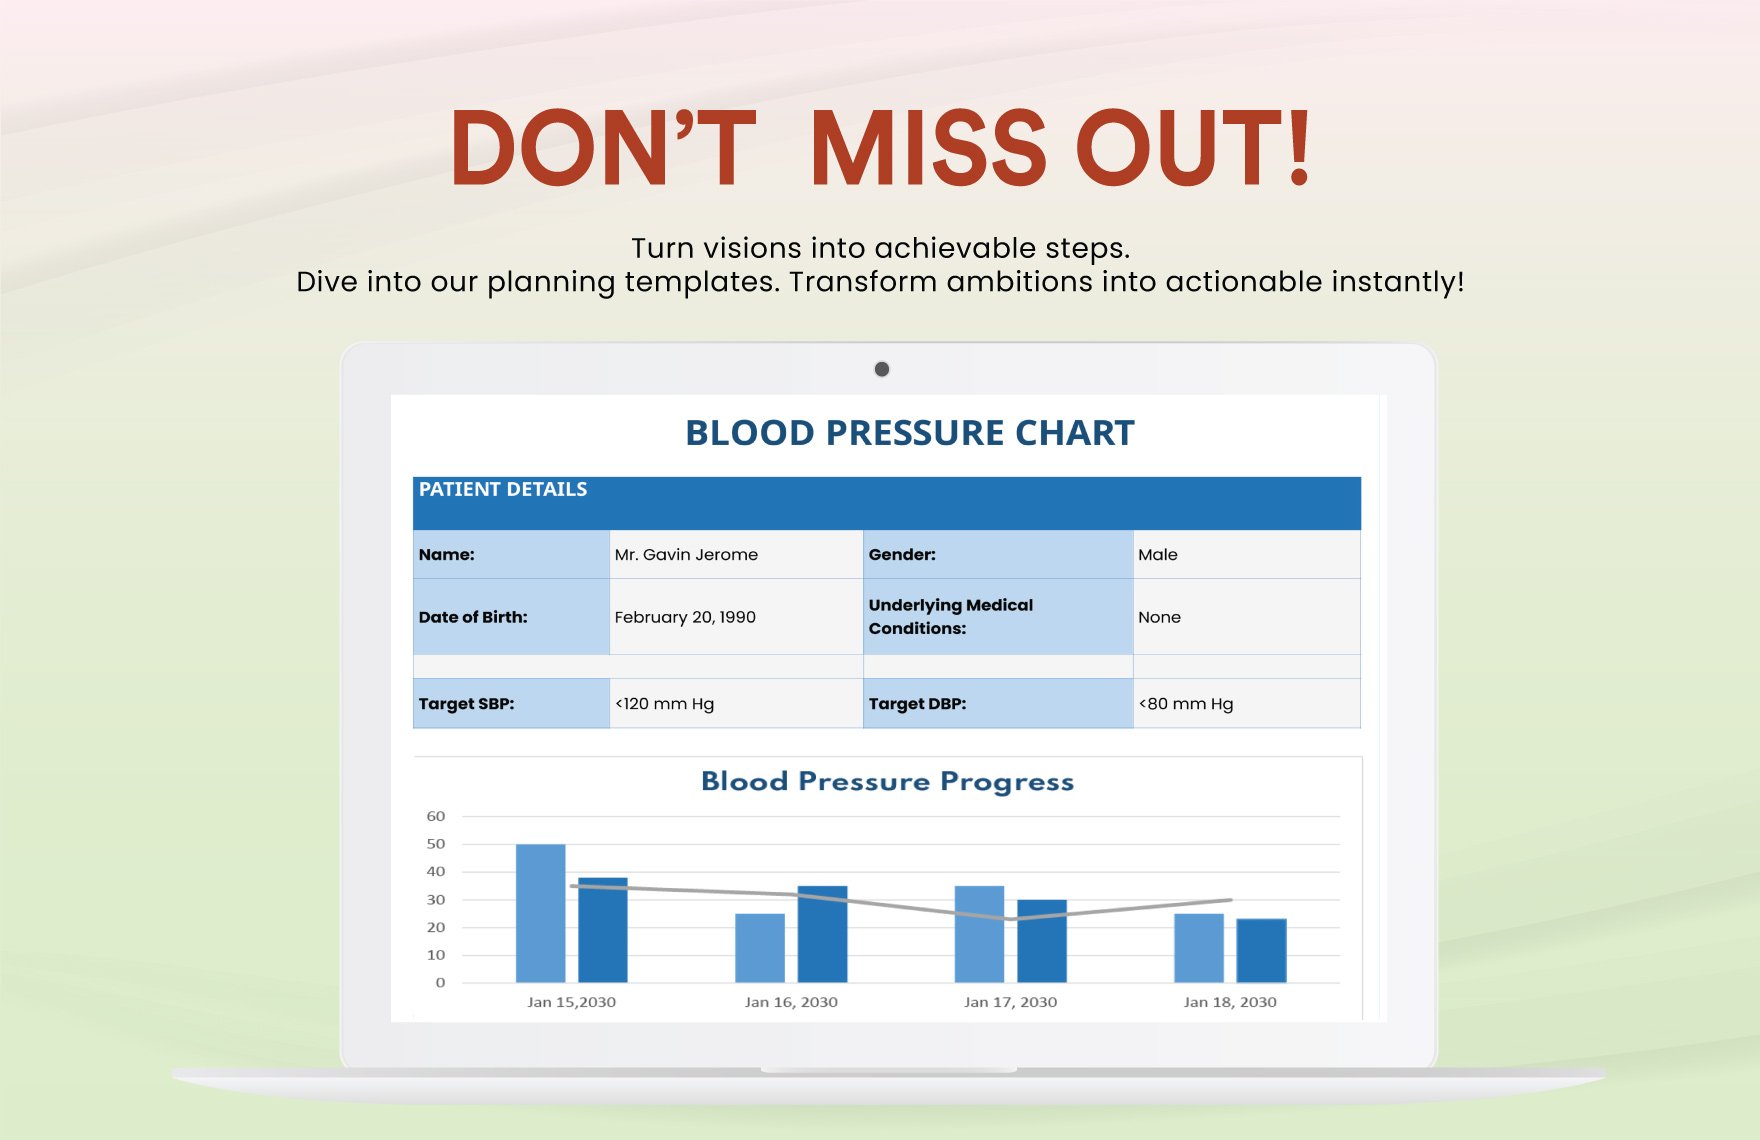 Blood Pressure Chart Template